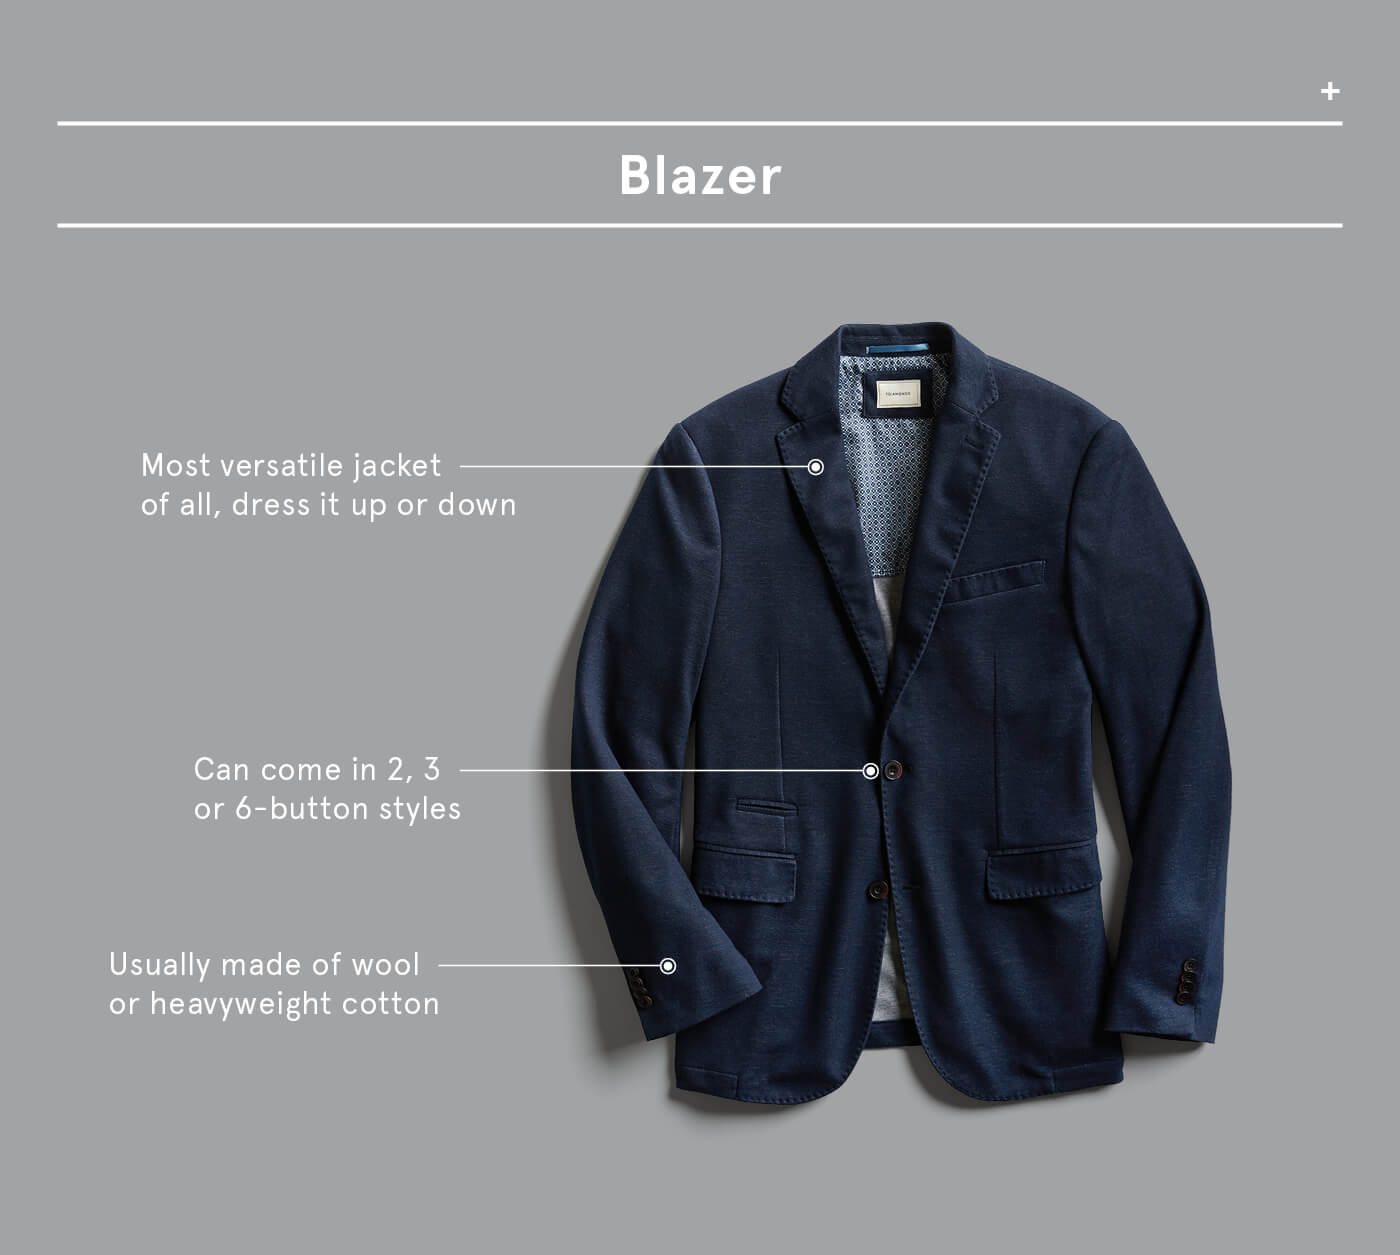 Blazer, Sport Coat, Suit Coatâ€”What'S The Difference? | Stitch Fix Men